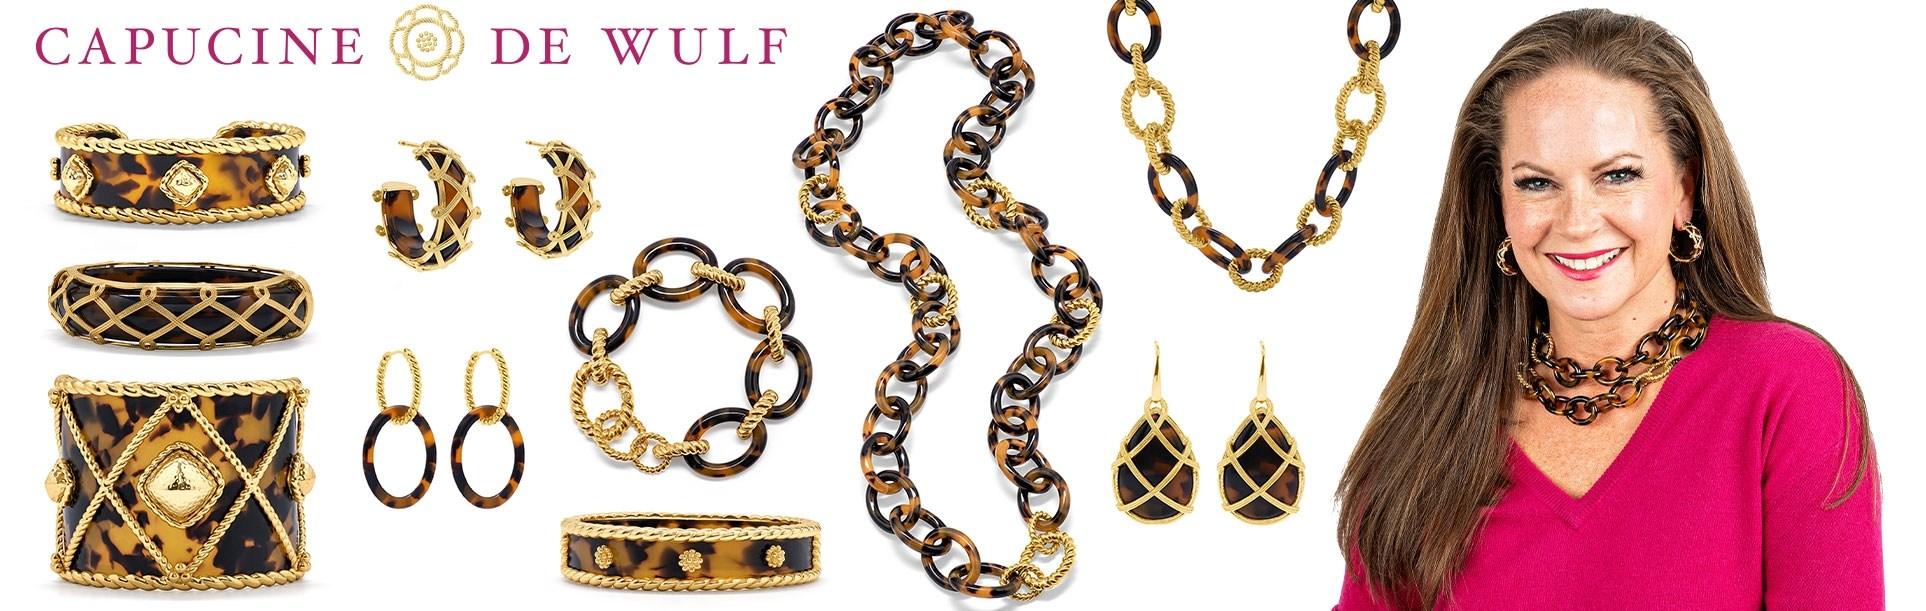 Capucine De Wulf Jewelry lifestyle products slide 7